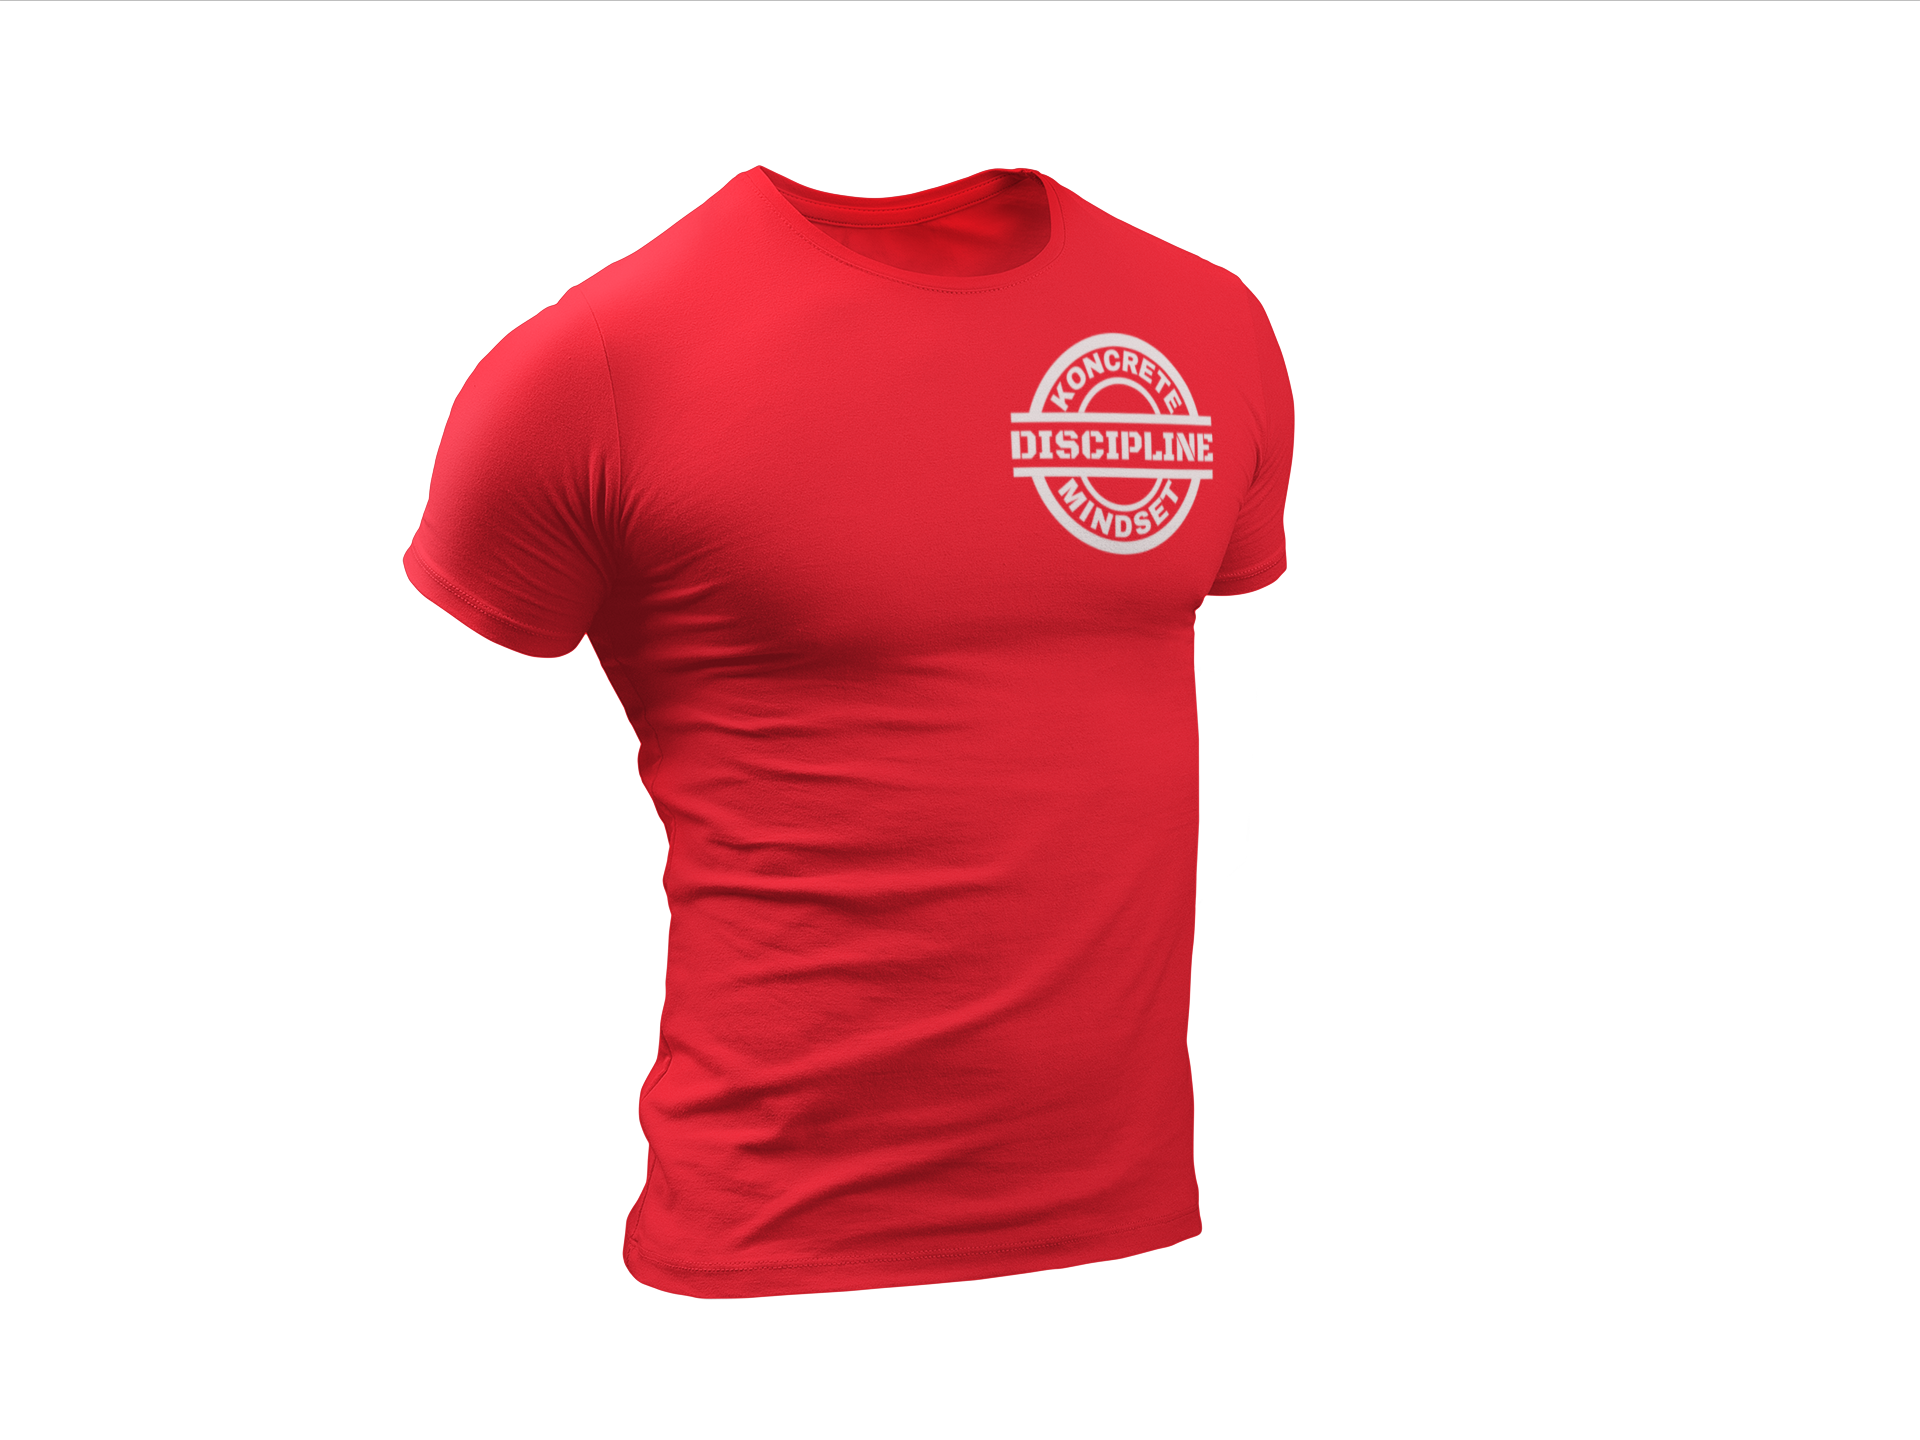 red  Koncrete Mindset discipline t-shirt with white design on left chest 